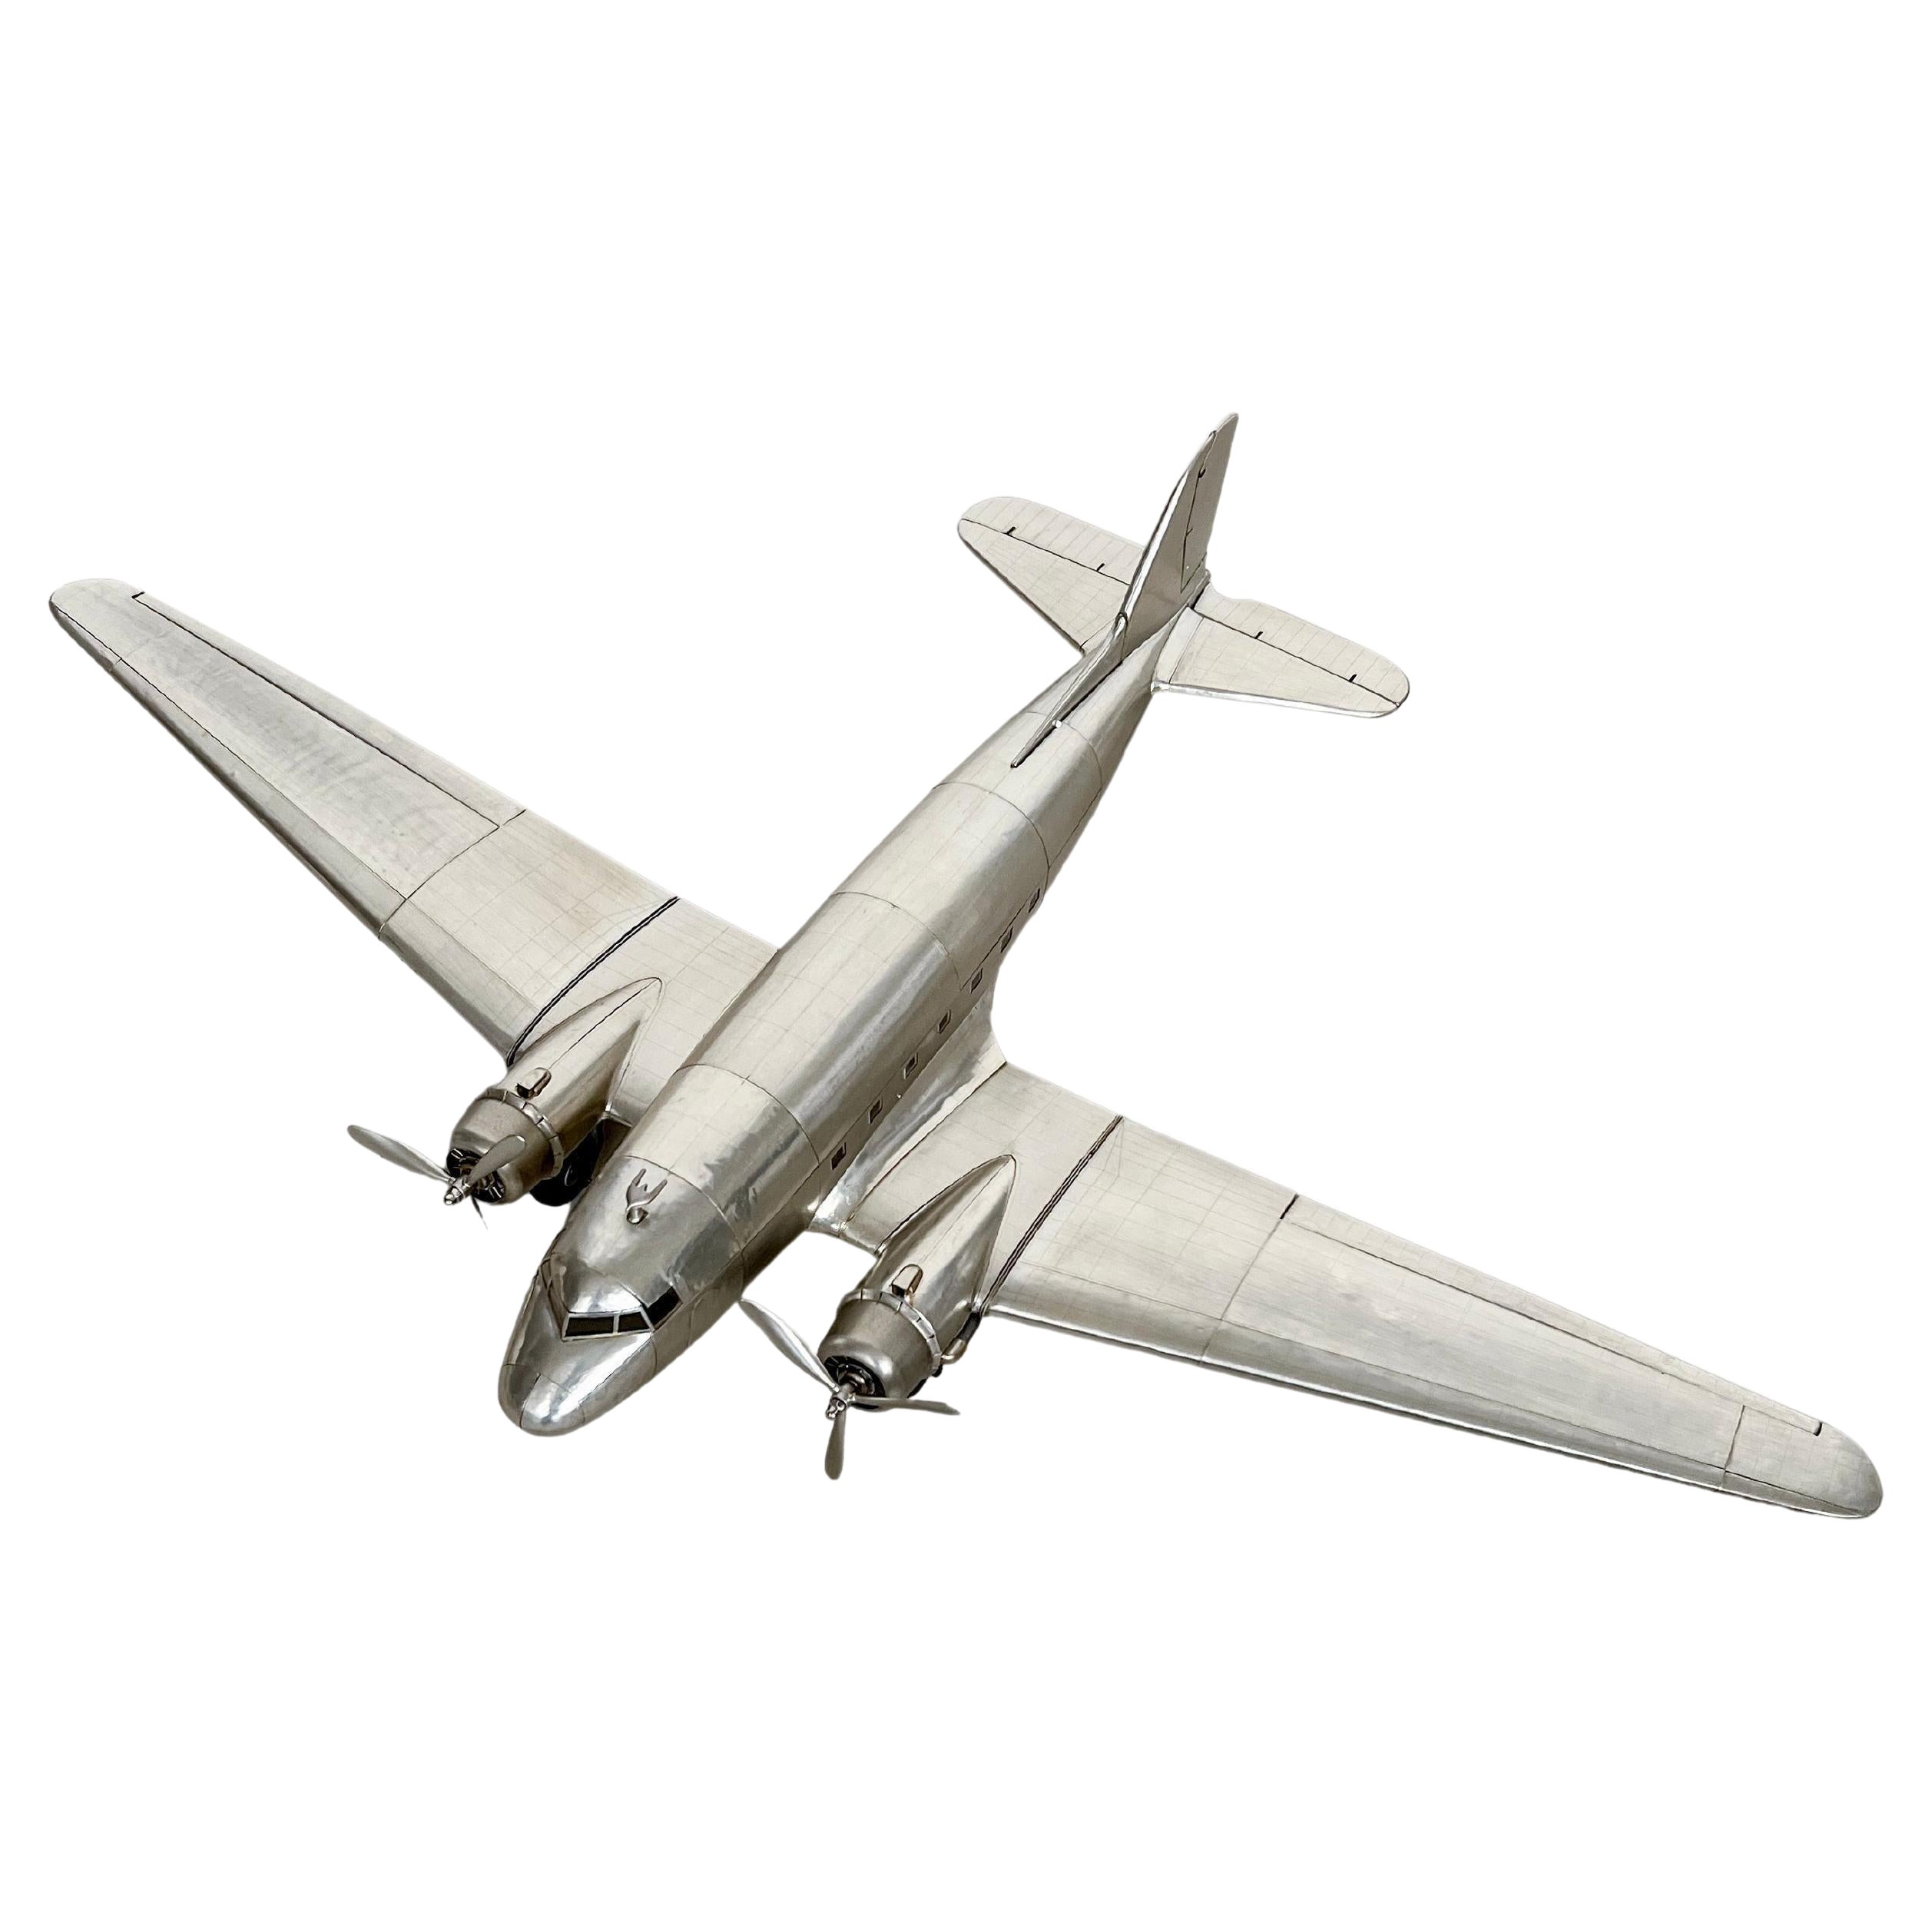 Douglas Dc-3 Aircraft Model, Big Size, Richly Detailed, Streamlined Metal Plane For Sale